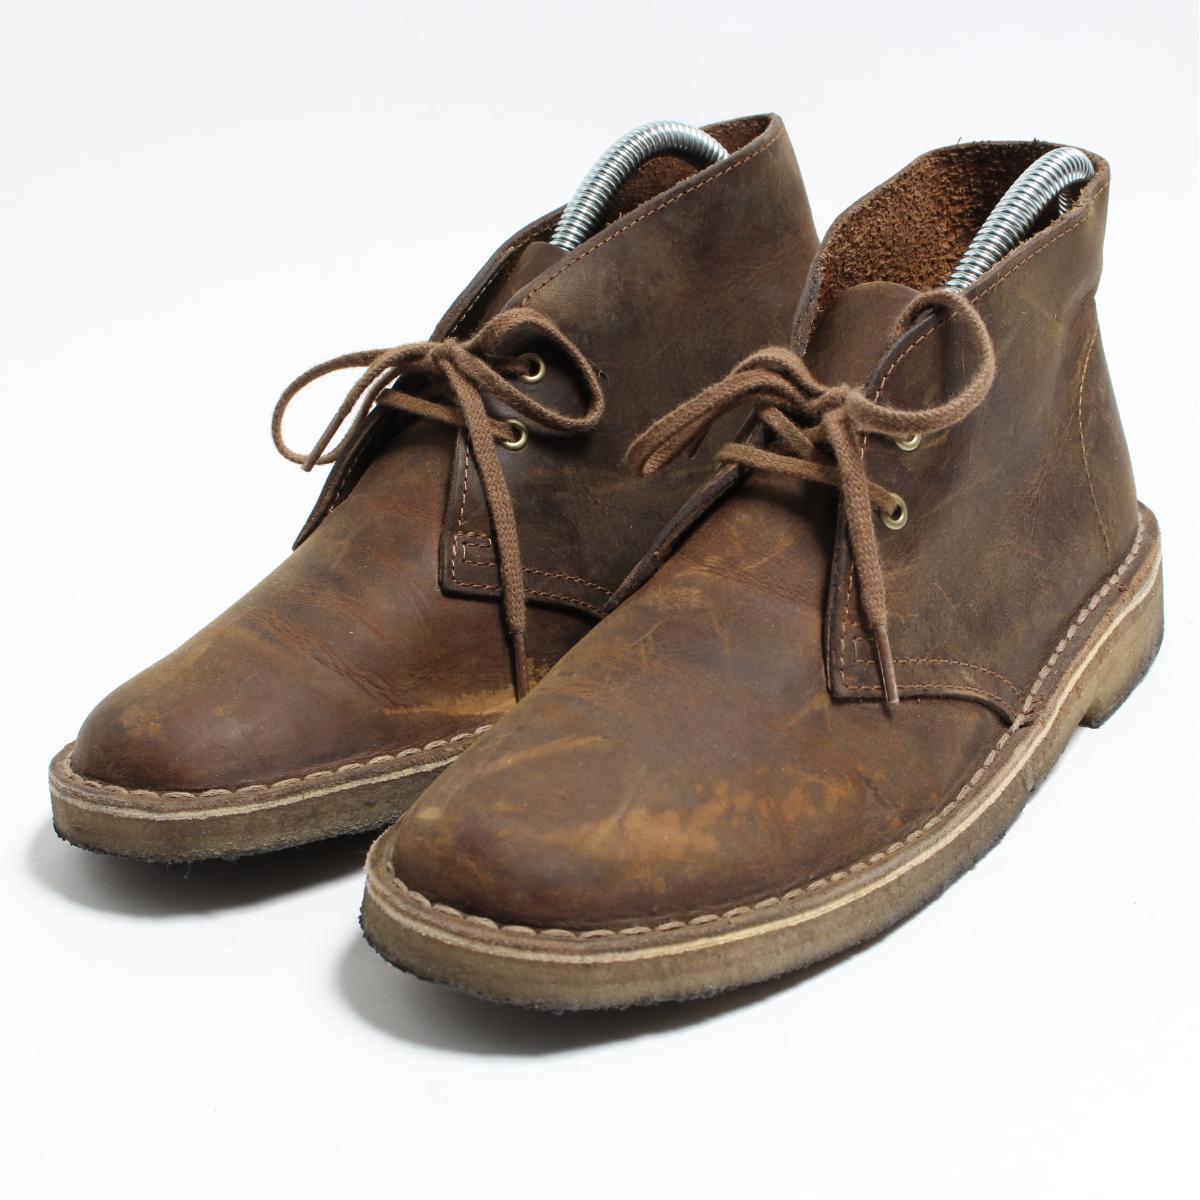 vintage clarks desert boots